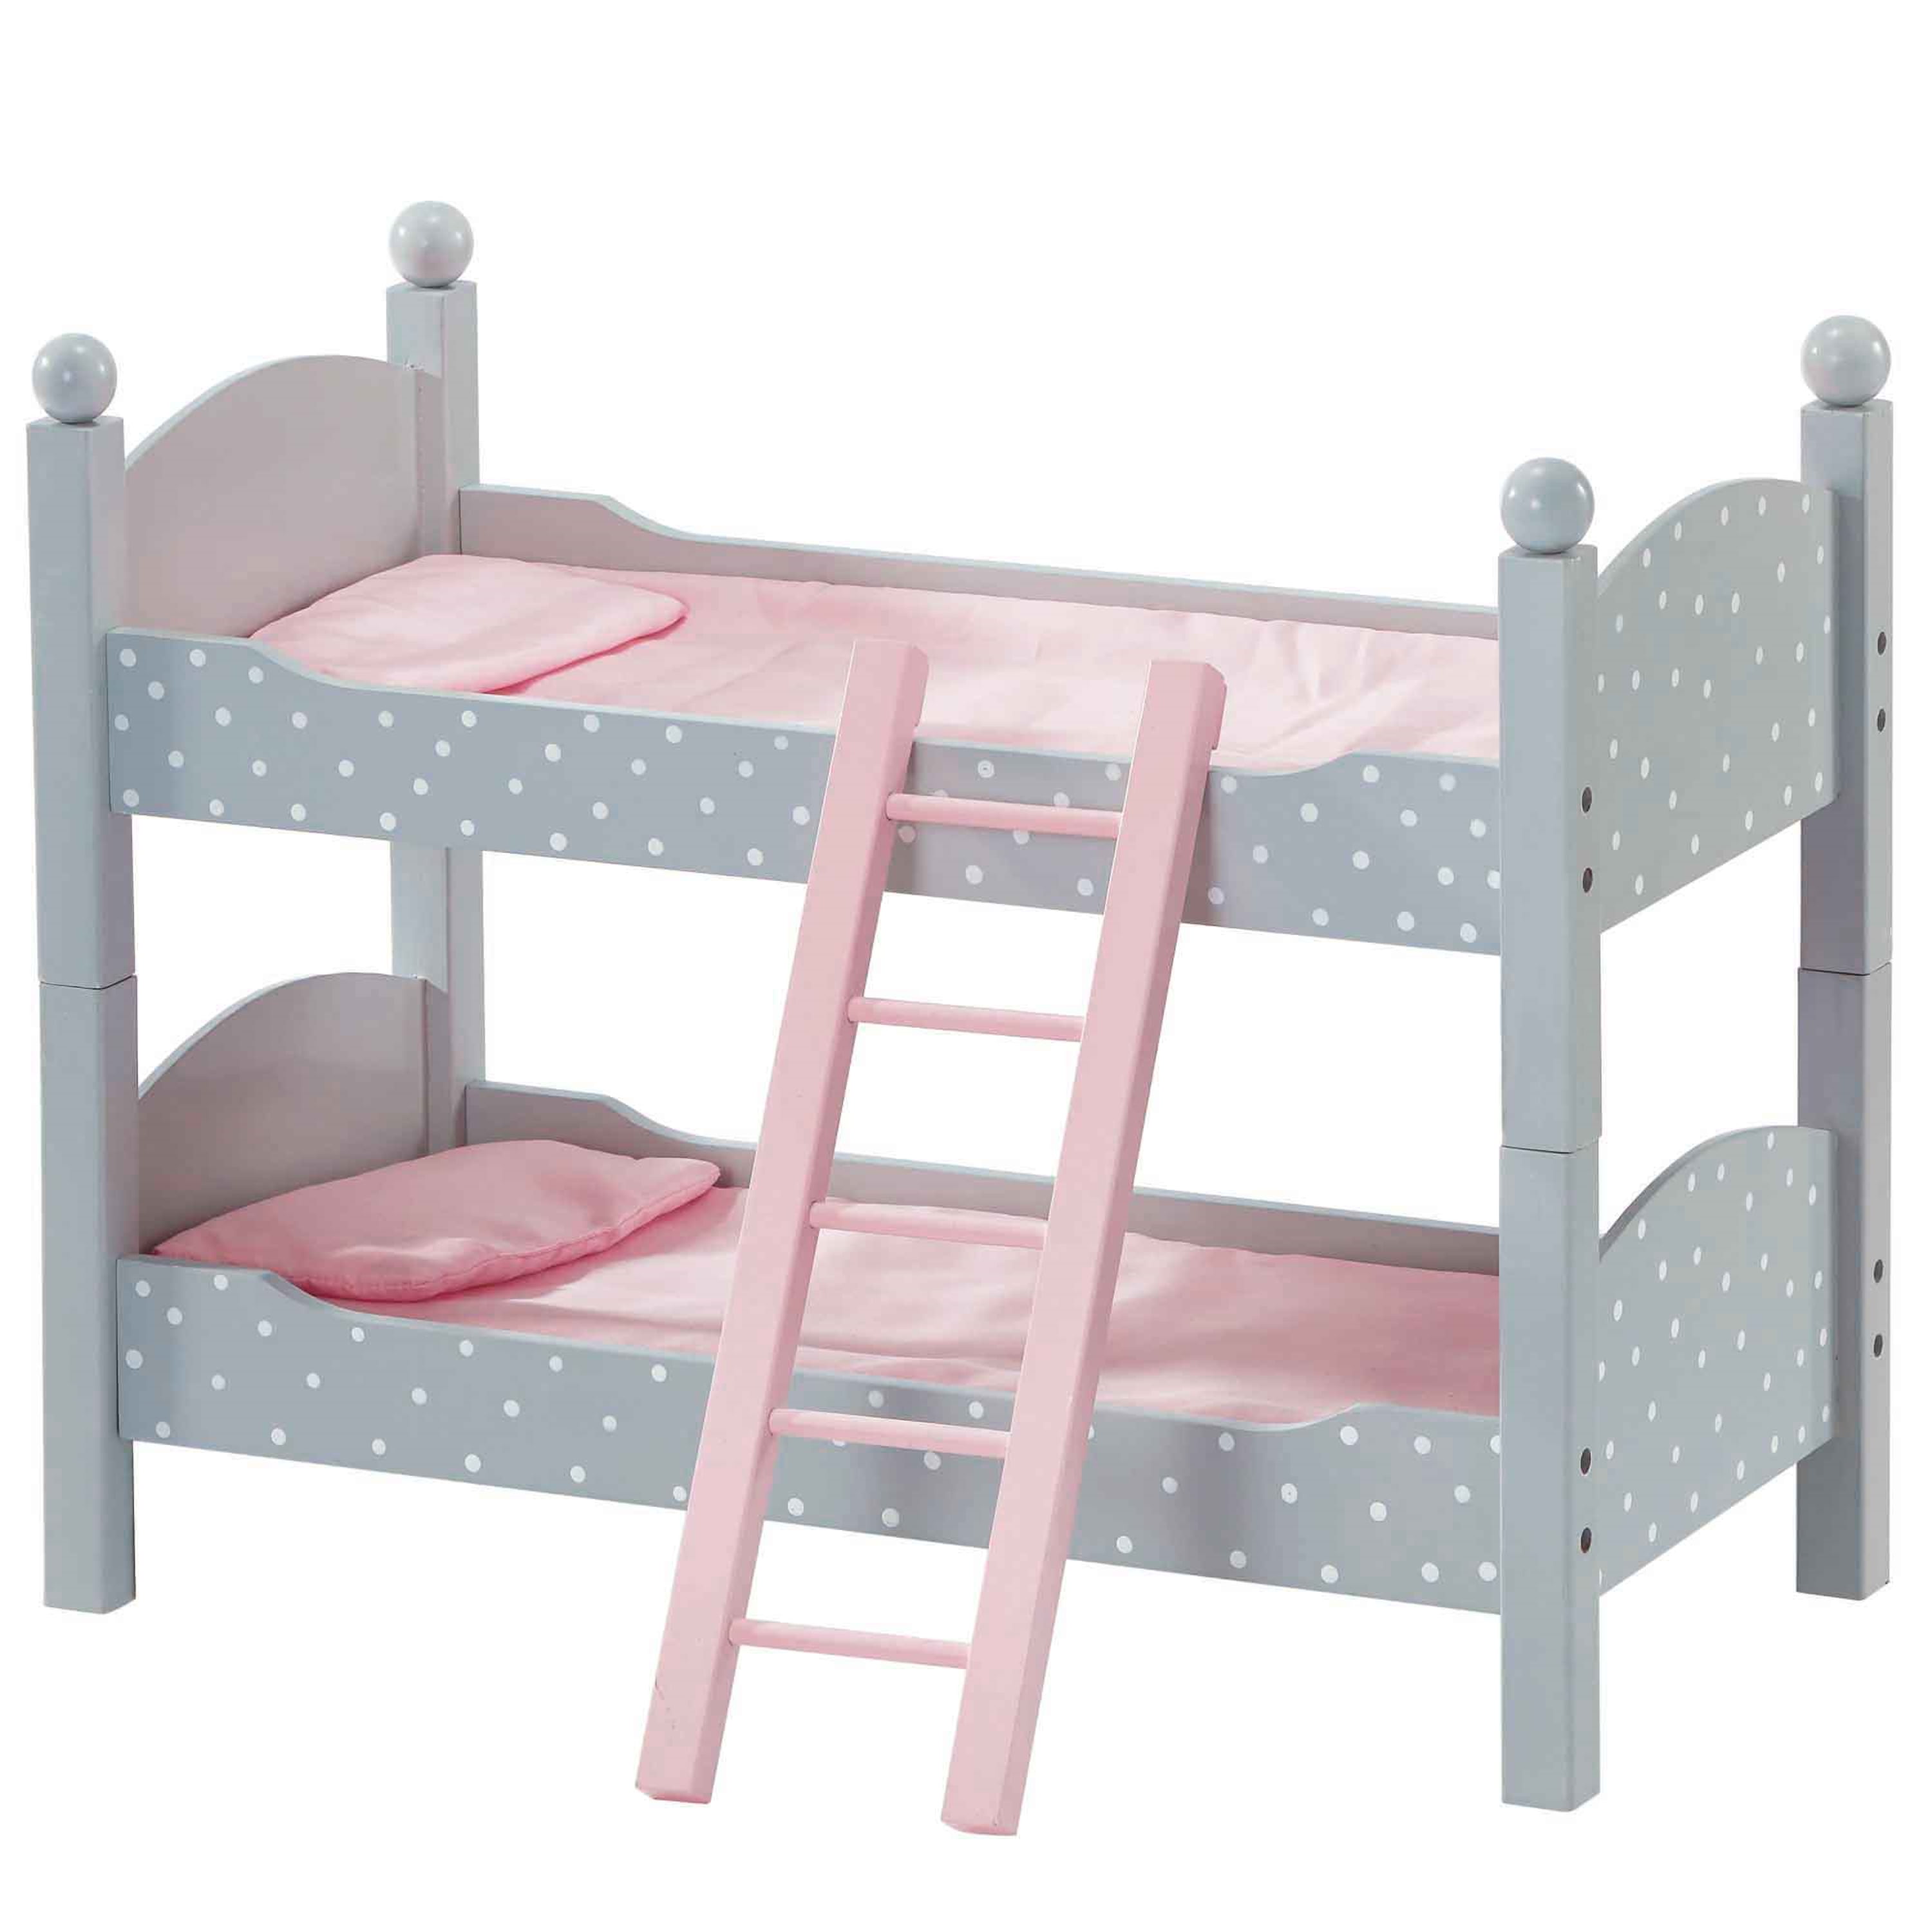 Dolls House White Wood Pink Gingham Bunks Bunk Beds Miniature Bedroom Furniture 